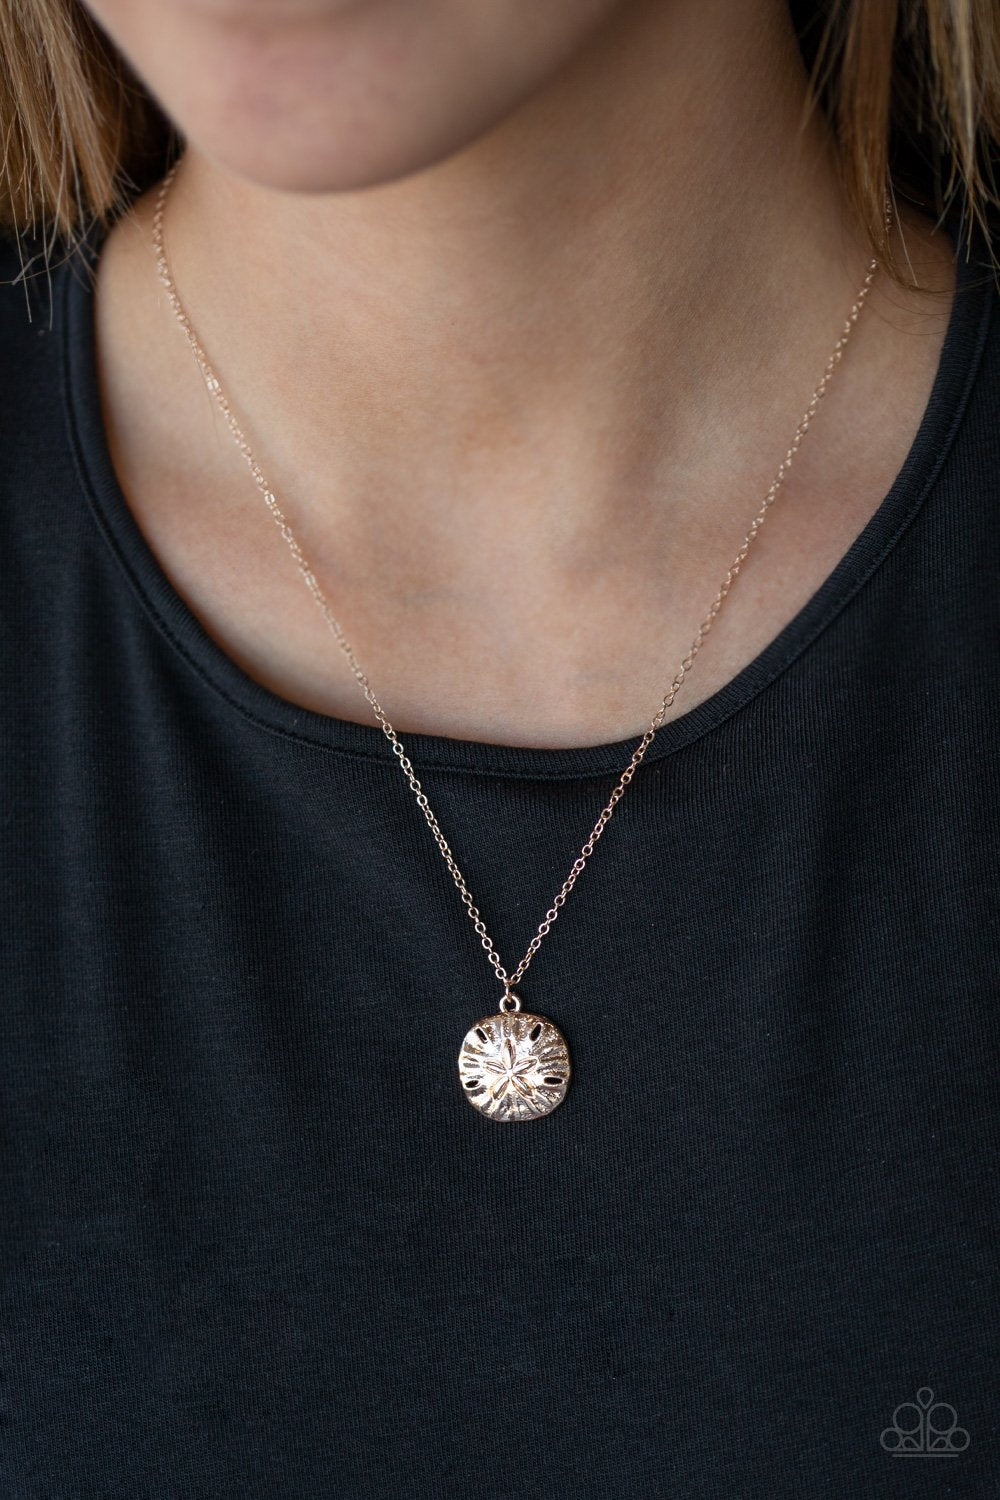 Sand Dollar Shores - rose gold - Paparazzi necklace – JewelryBlingThing